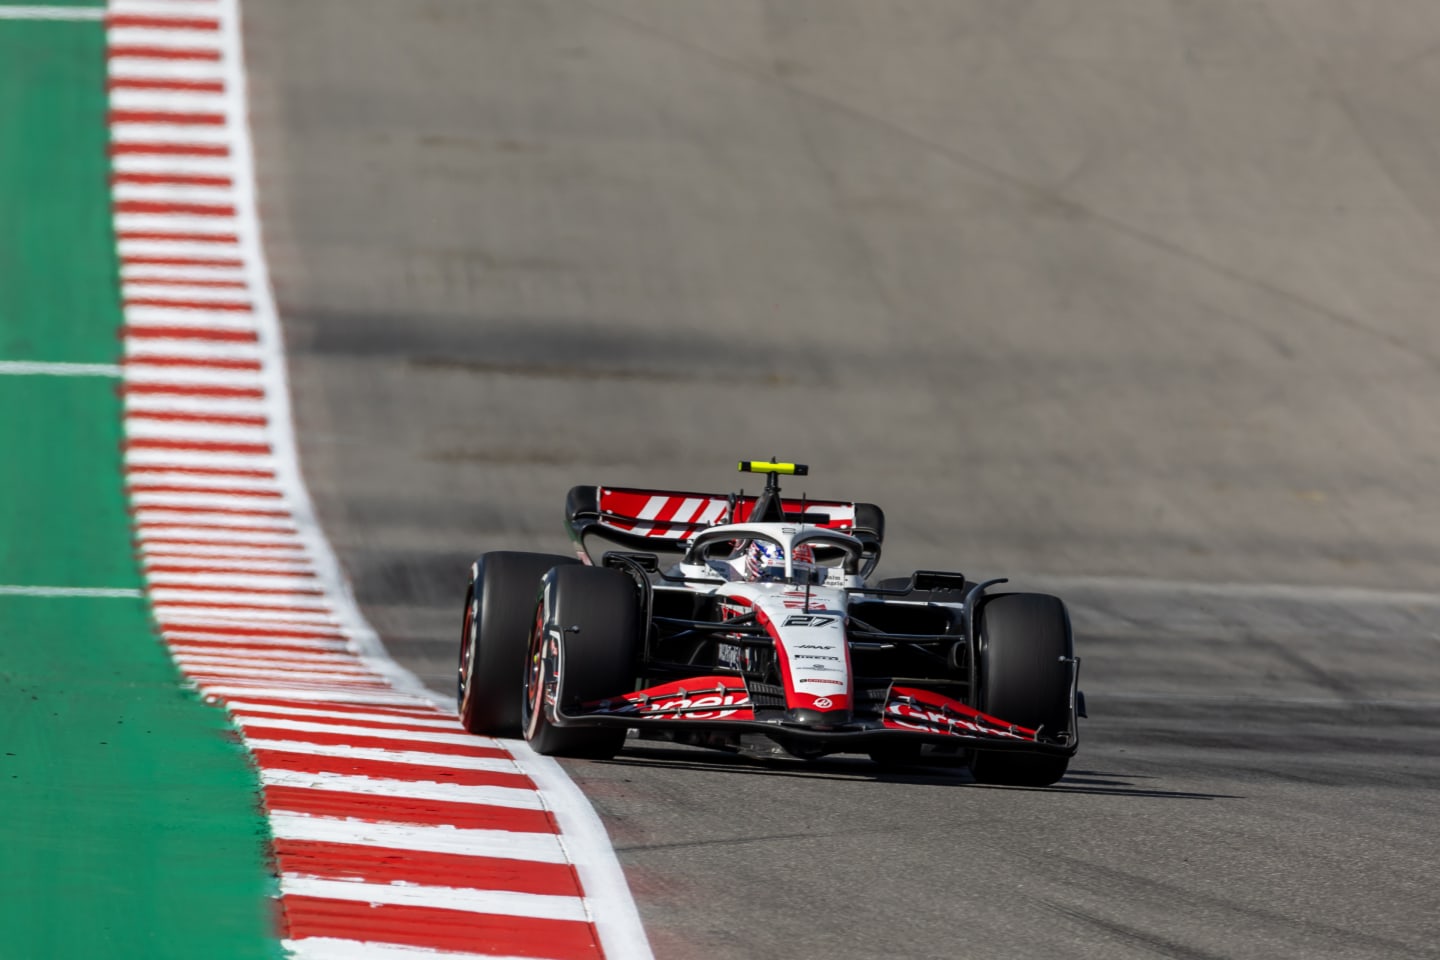 AUSTIN, TX - OCTOBER 22: MoneyGram HAAS F1 Team driver Nico Hulkenberg (27) of Germany speeds up